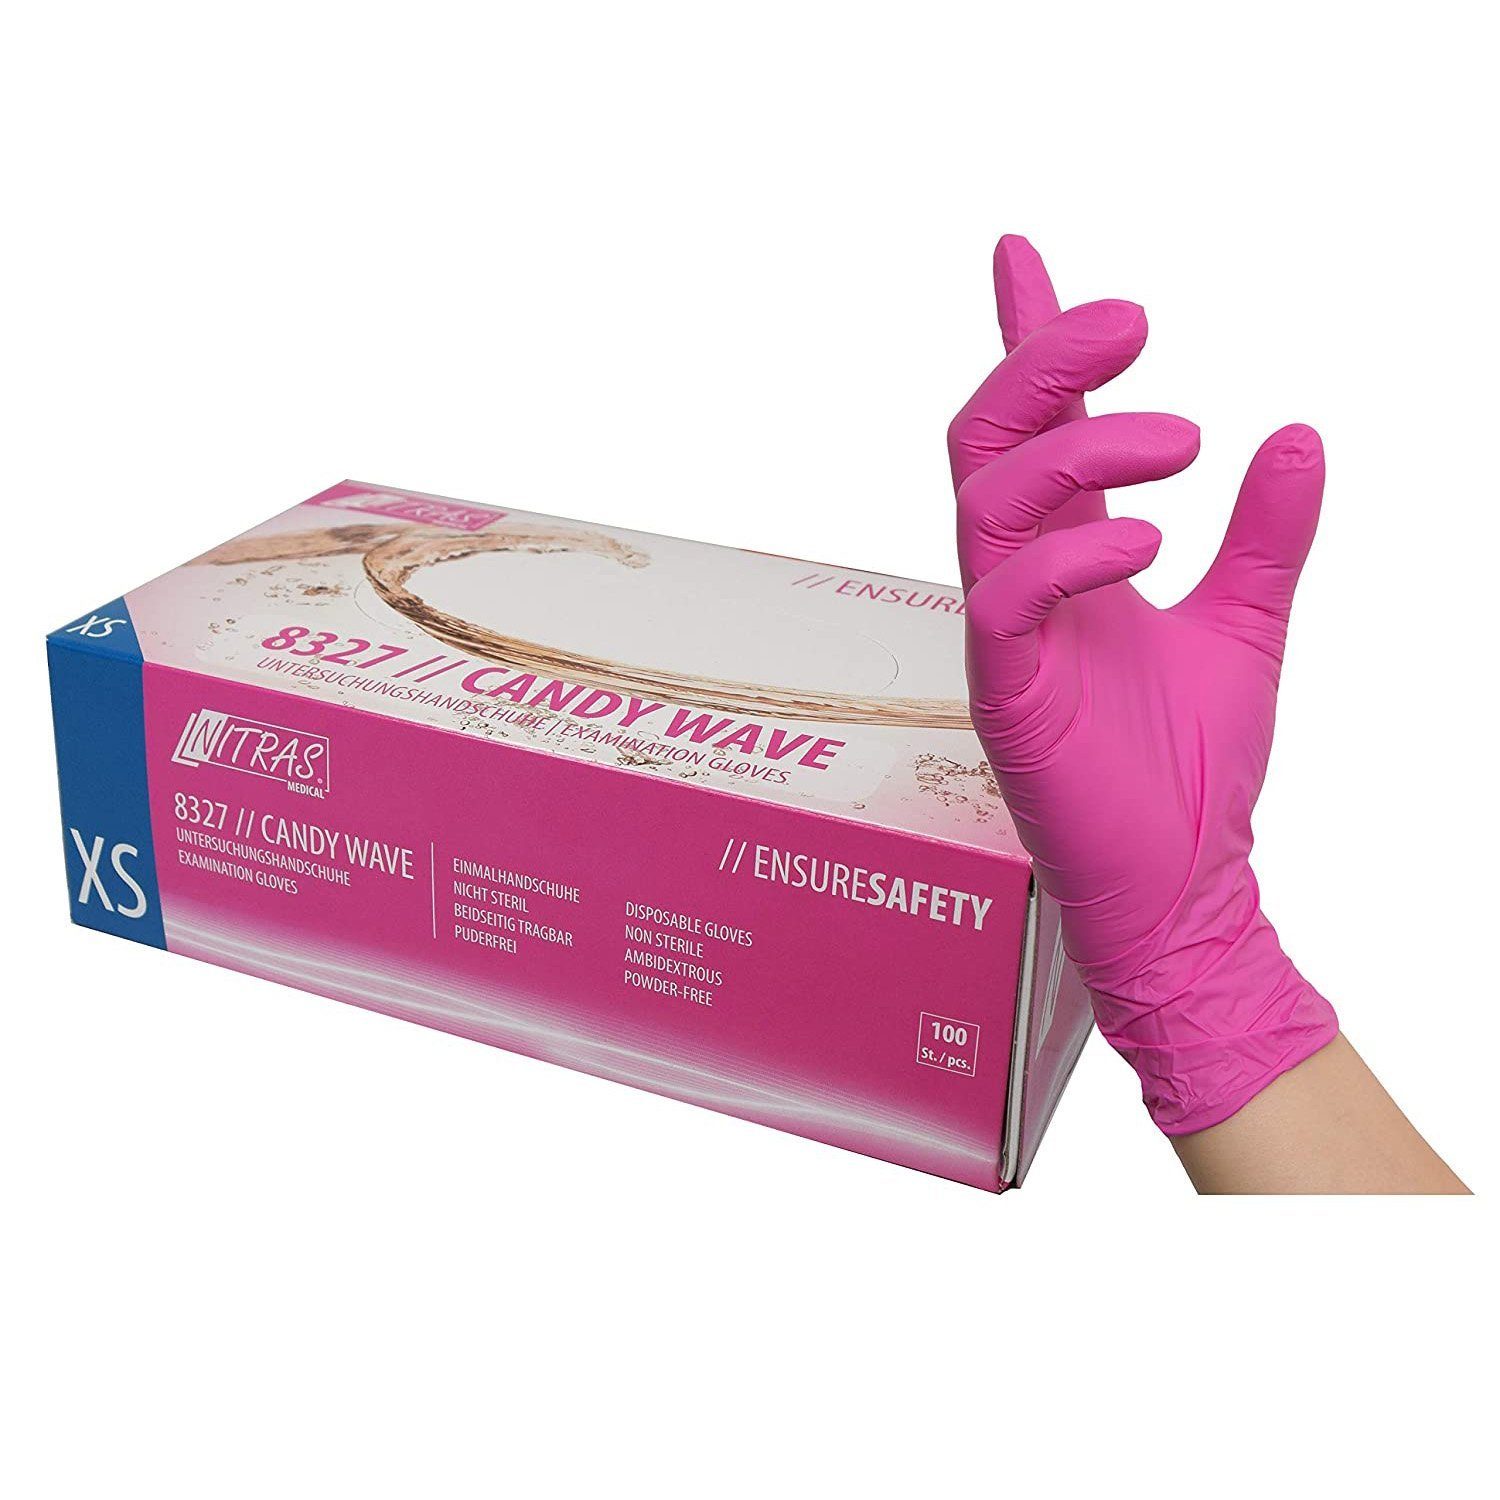 Nitras Einweghandschuhe Candy Wave Nitril-Handschuhe in Spender-Box – pude